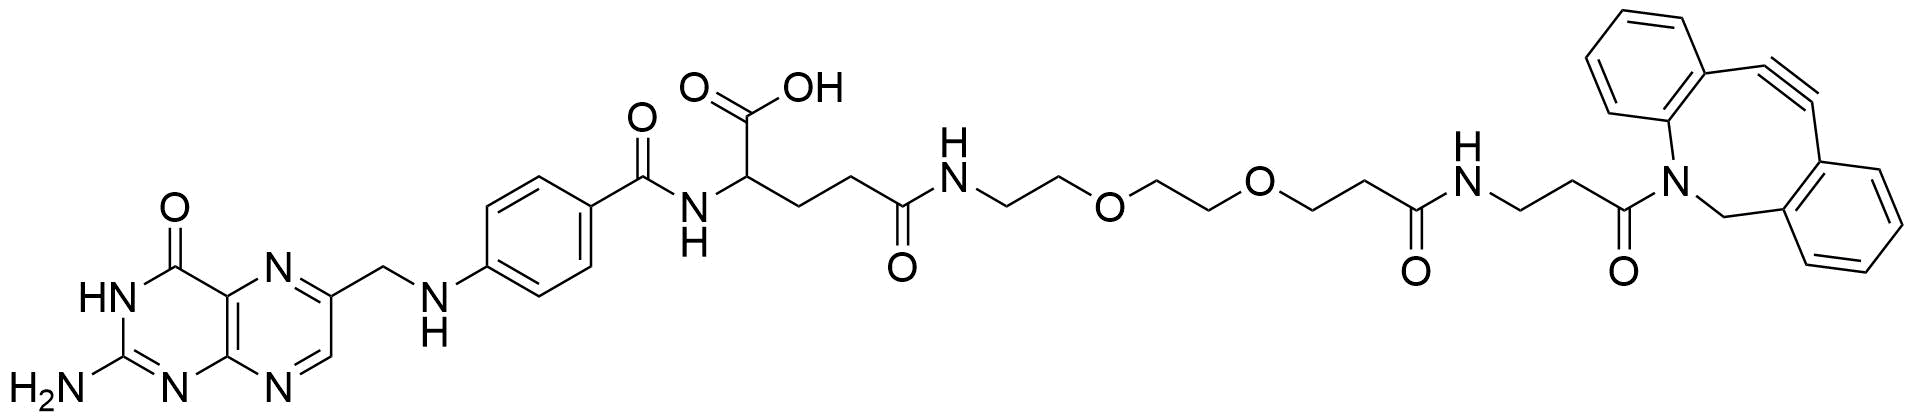 Folate-PEG2 DBCO amide